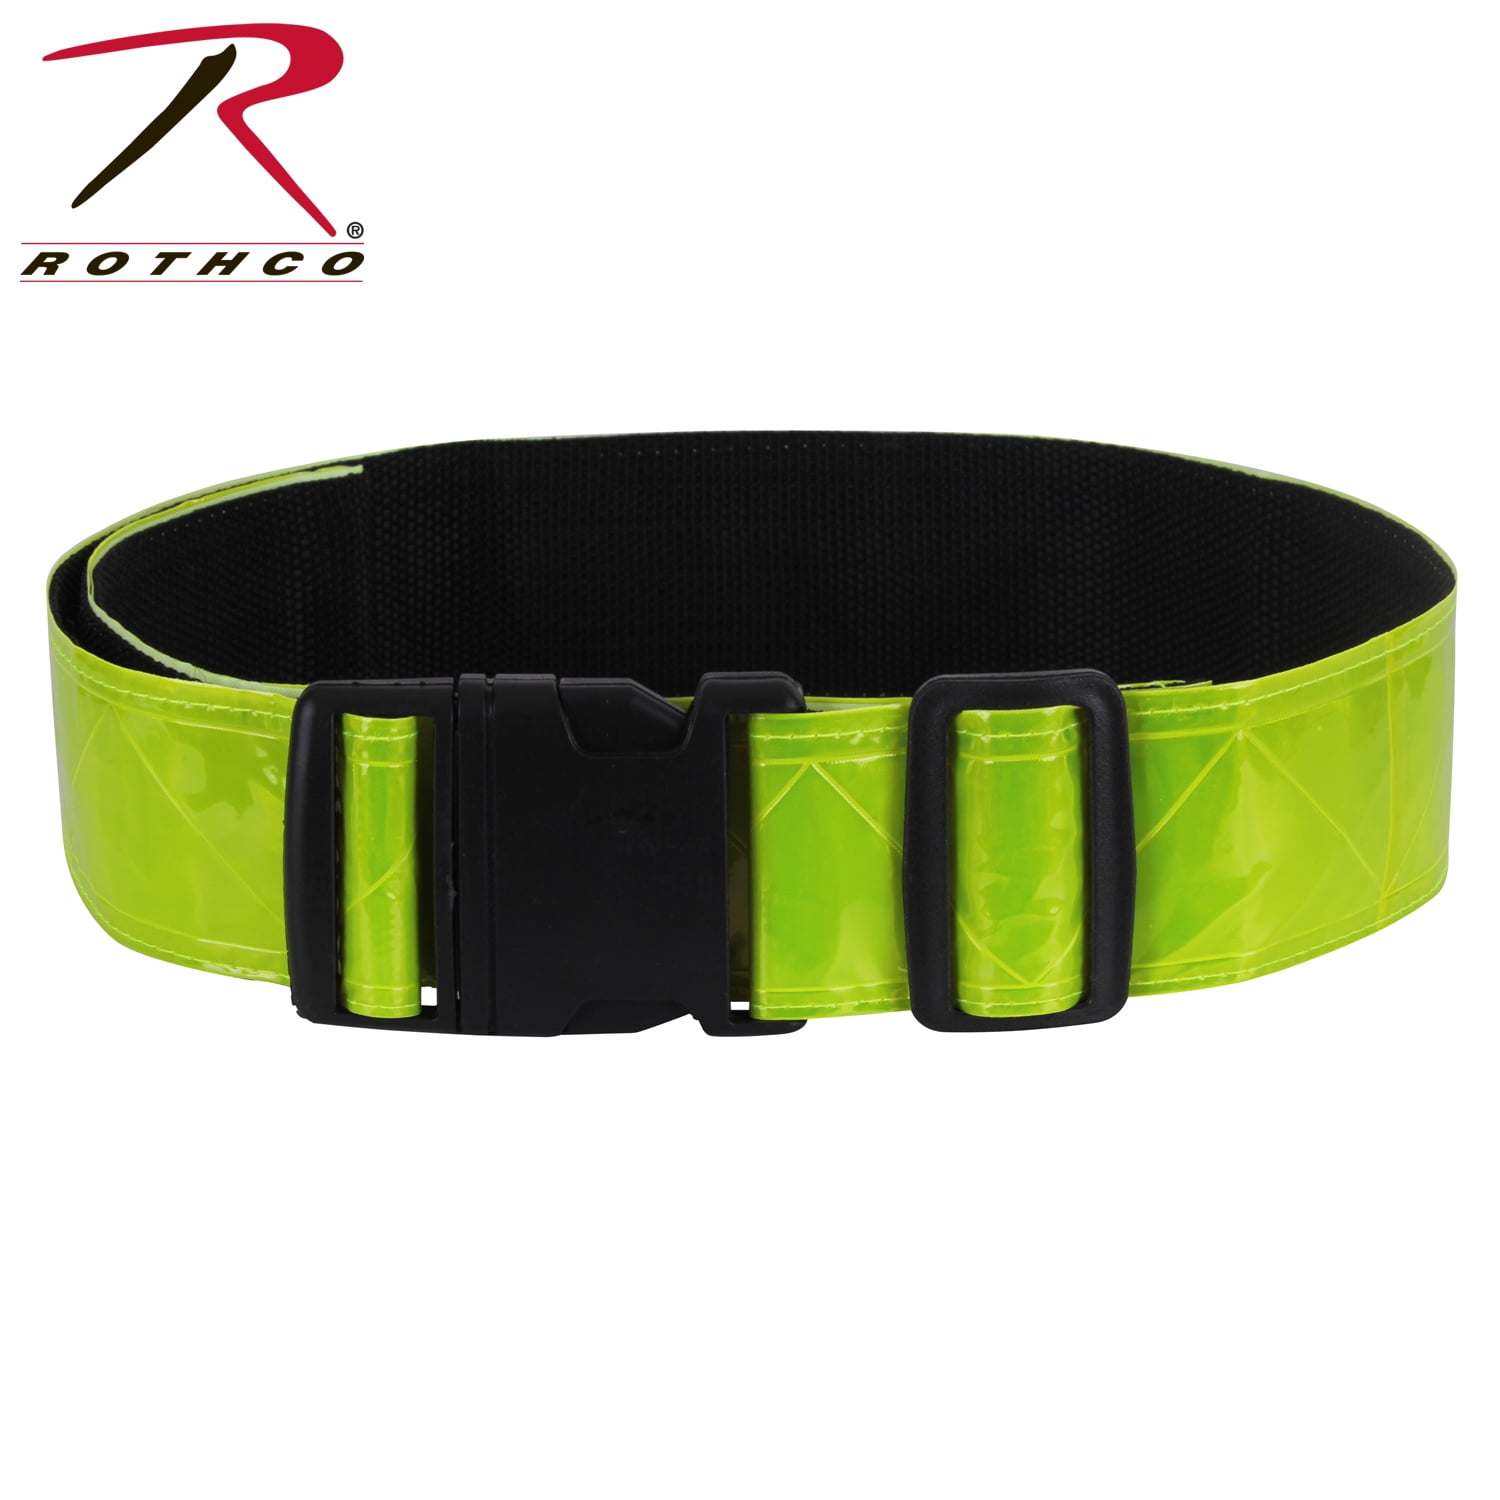 Rothco Reflective Physical Training Belt - Yellow